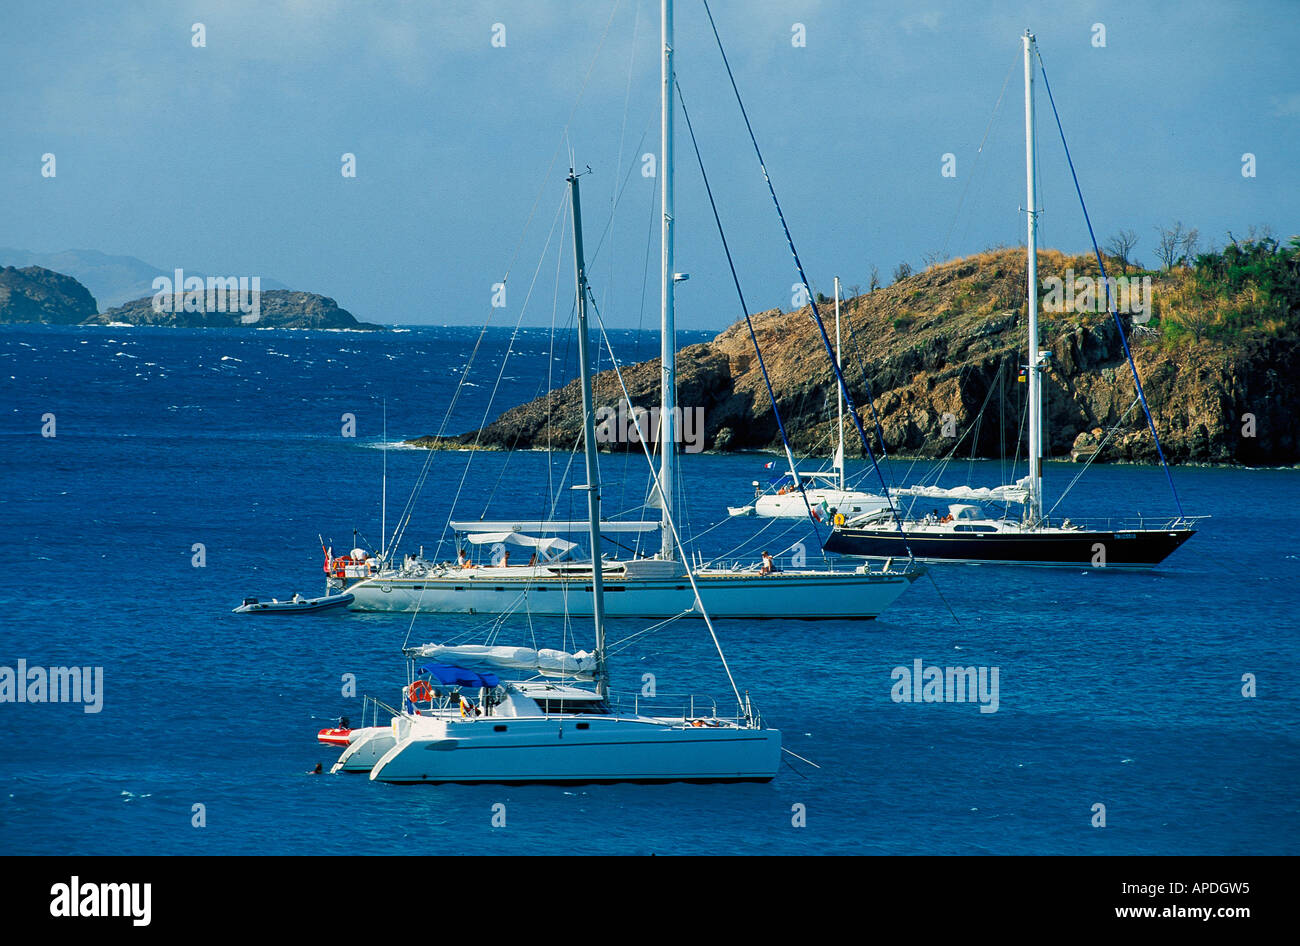 Sailing boat, Iles de Saintes, Guadeloupe Caribbean, America Stock Photo